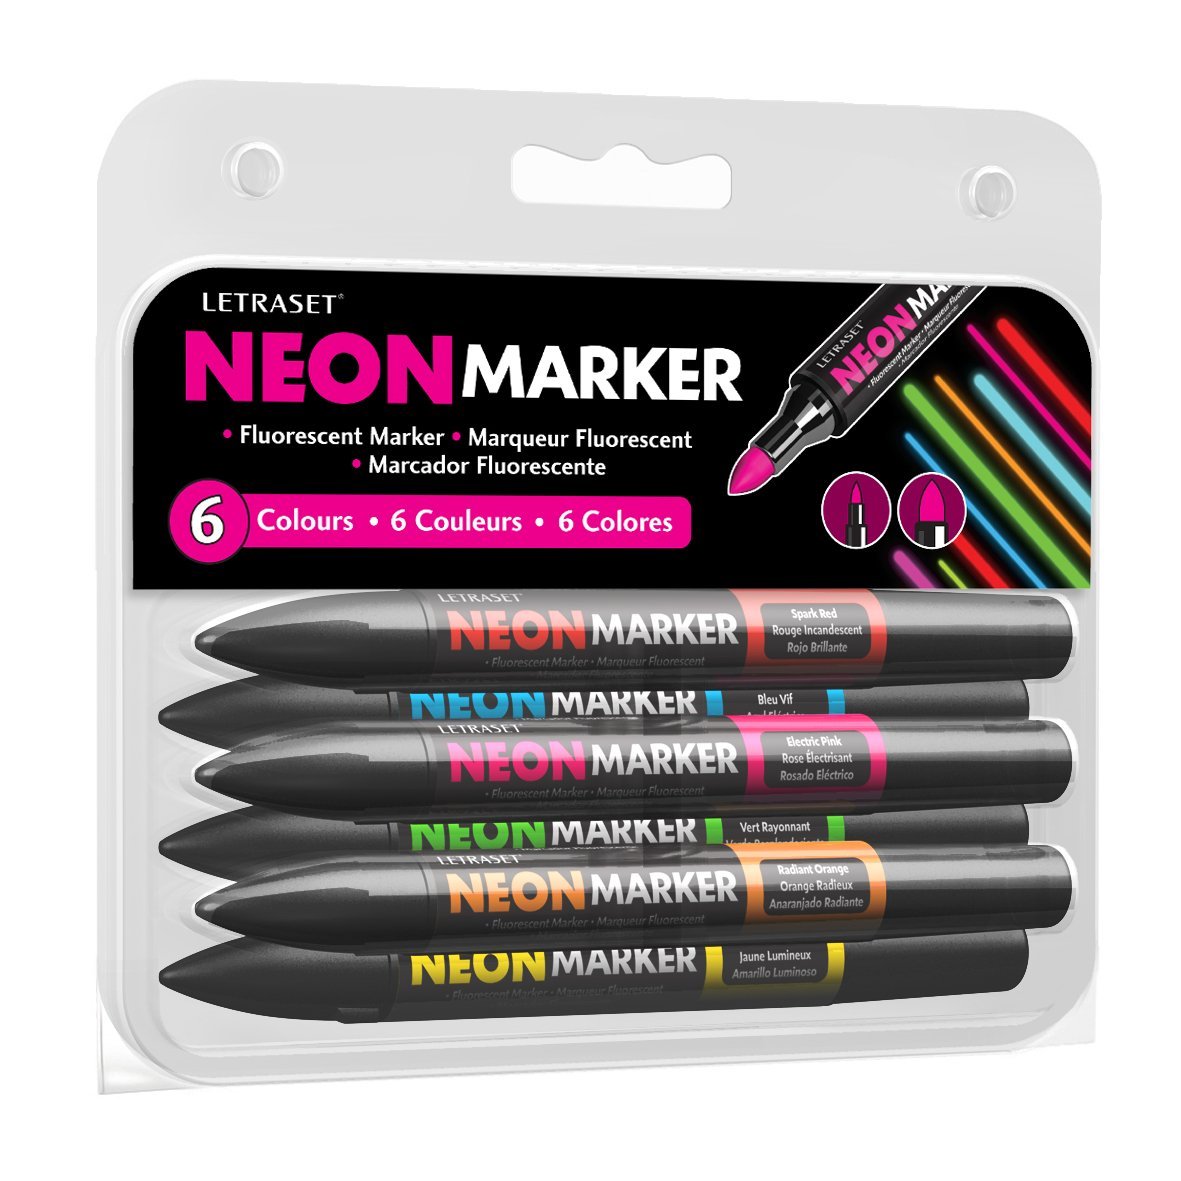 LETRASET Neon Marker 6 Fluorescent Marker Colors